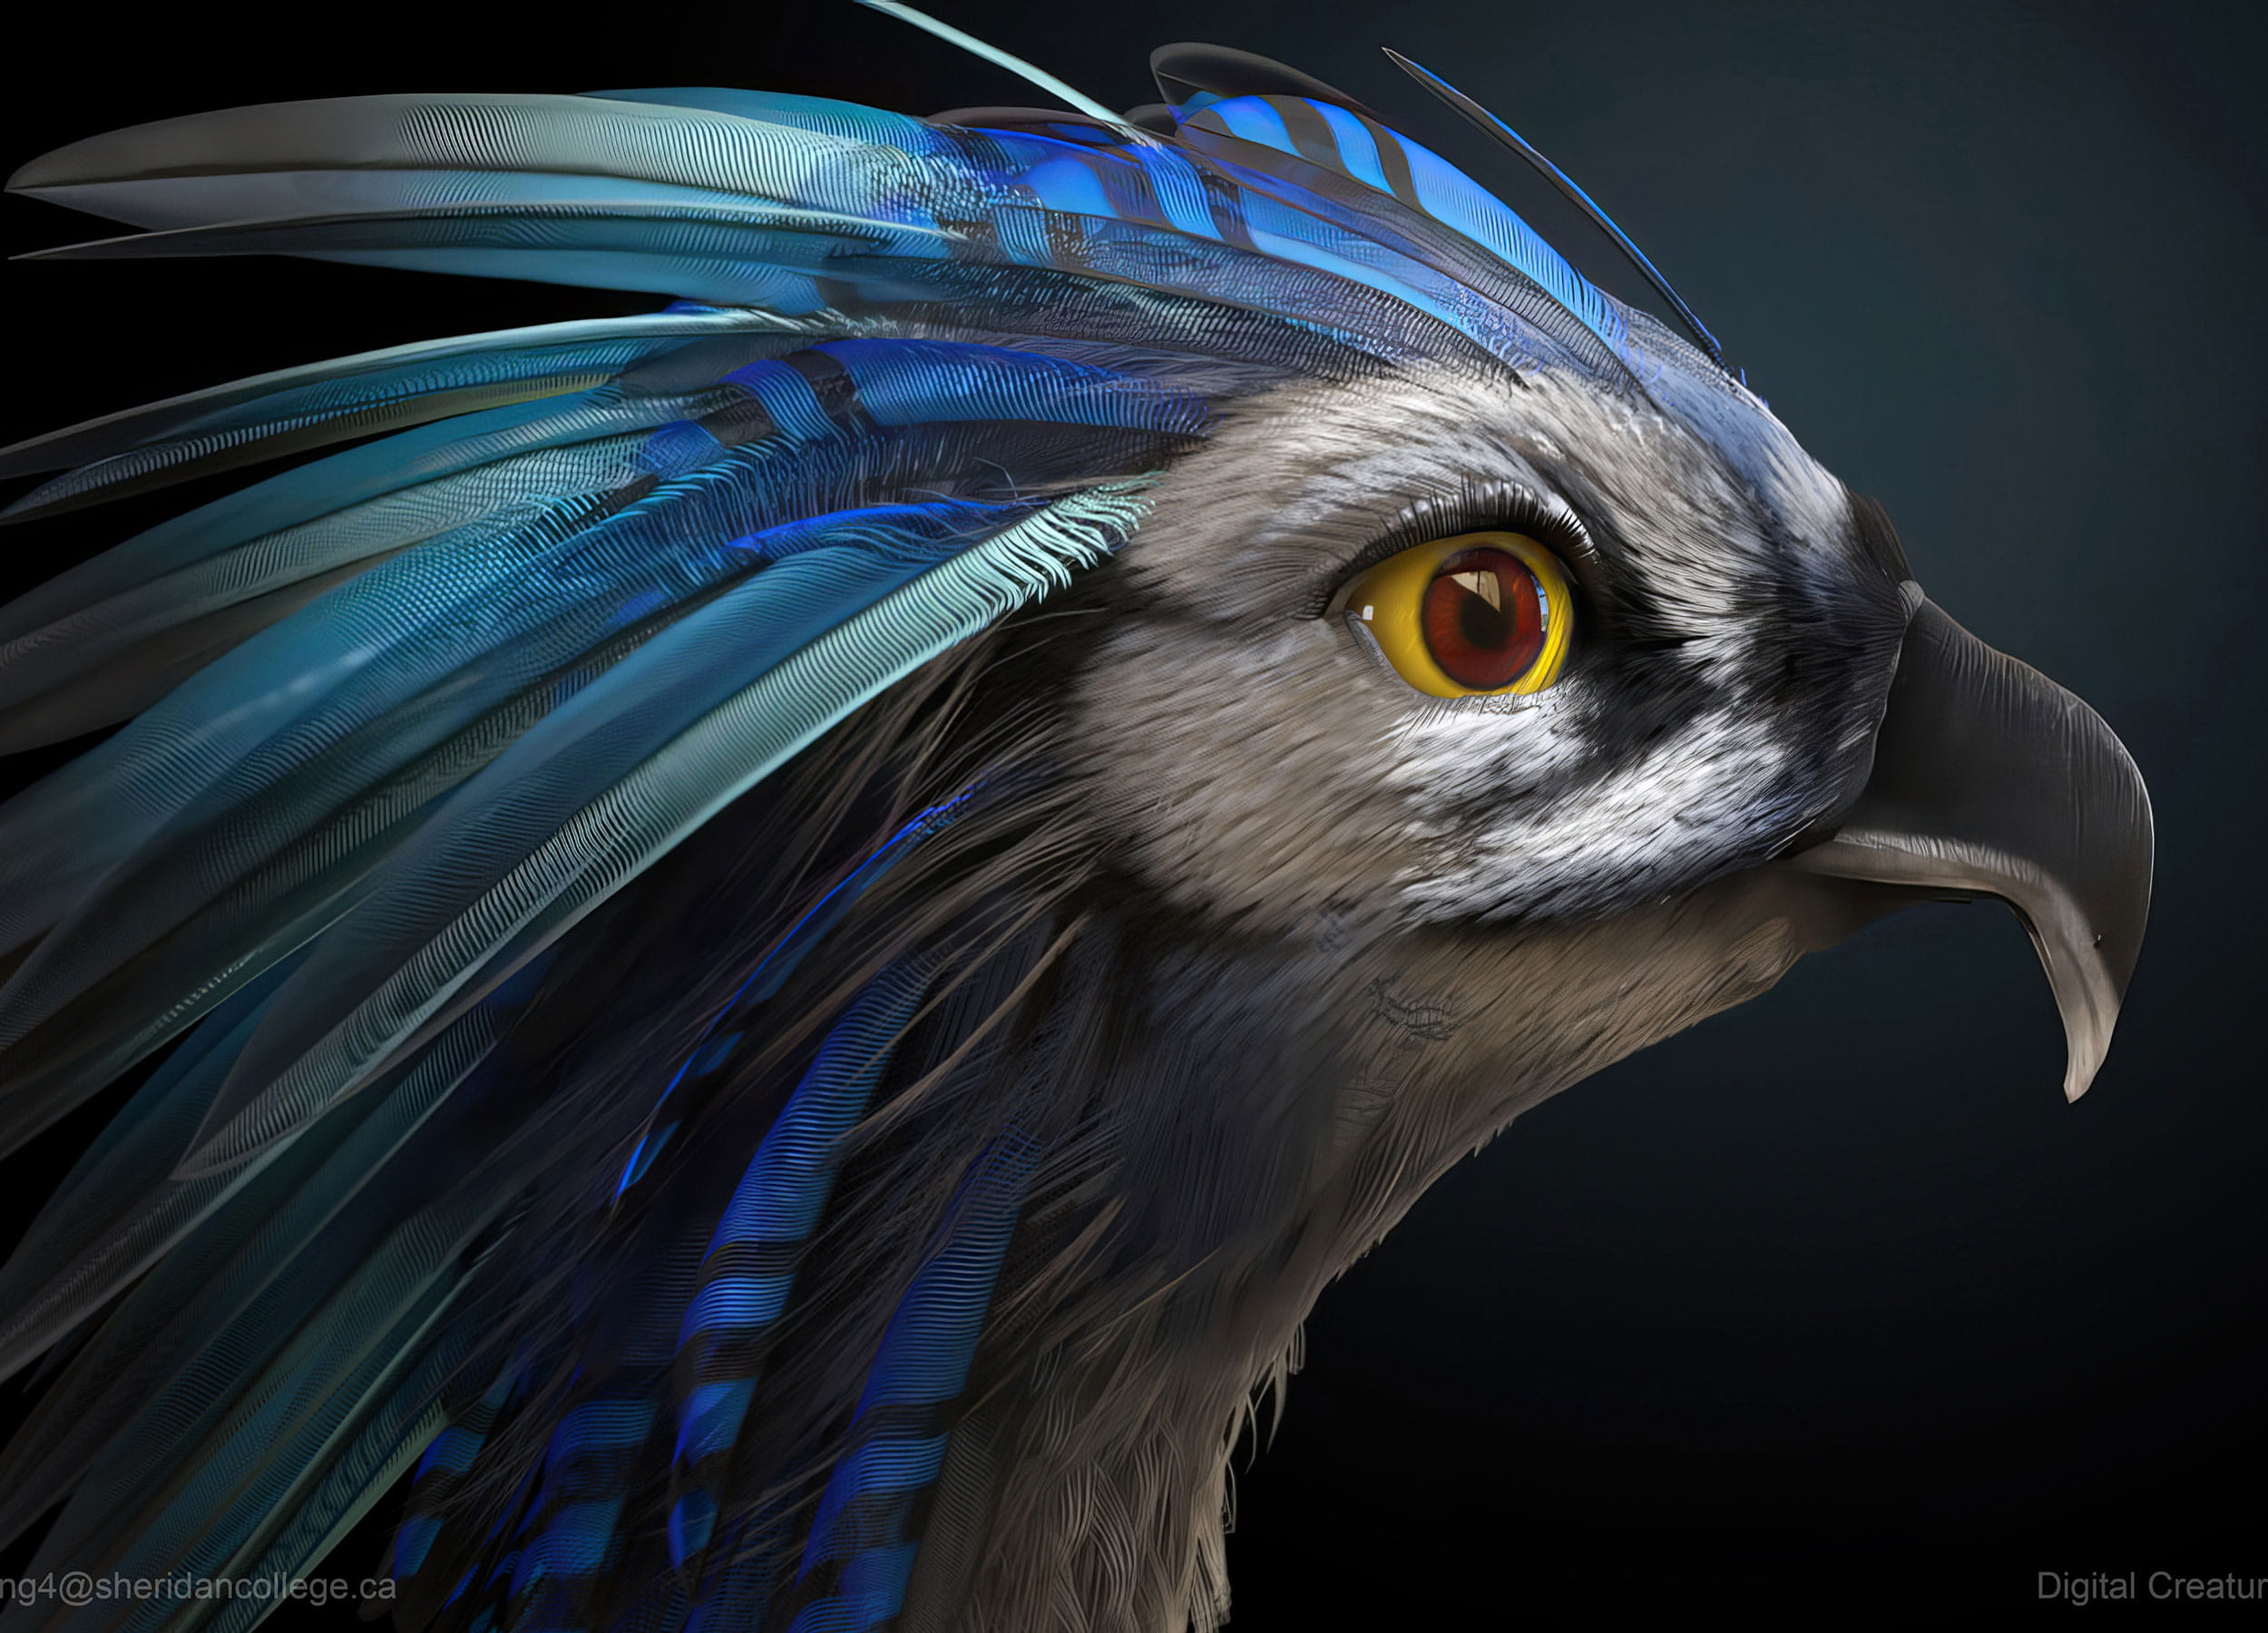 A digitally animated bird-like creature, created by Sheridan grad Yue Hong